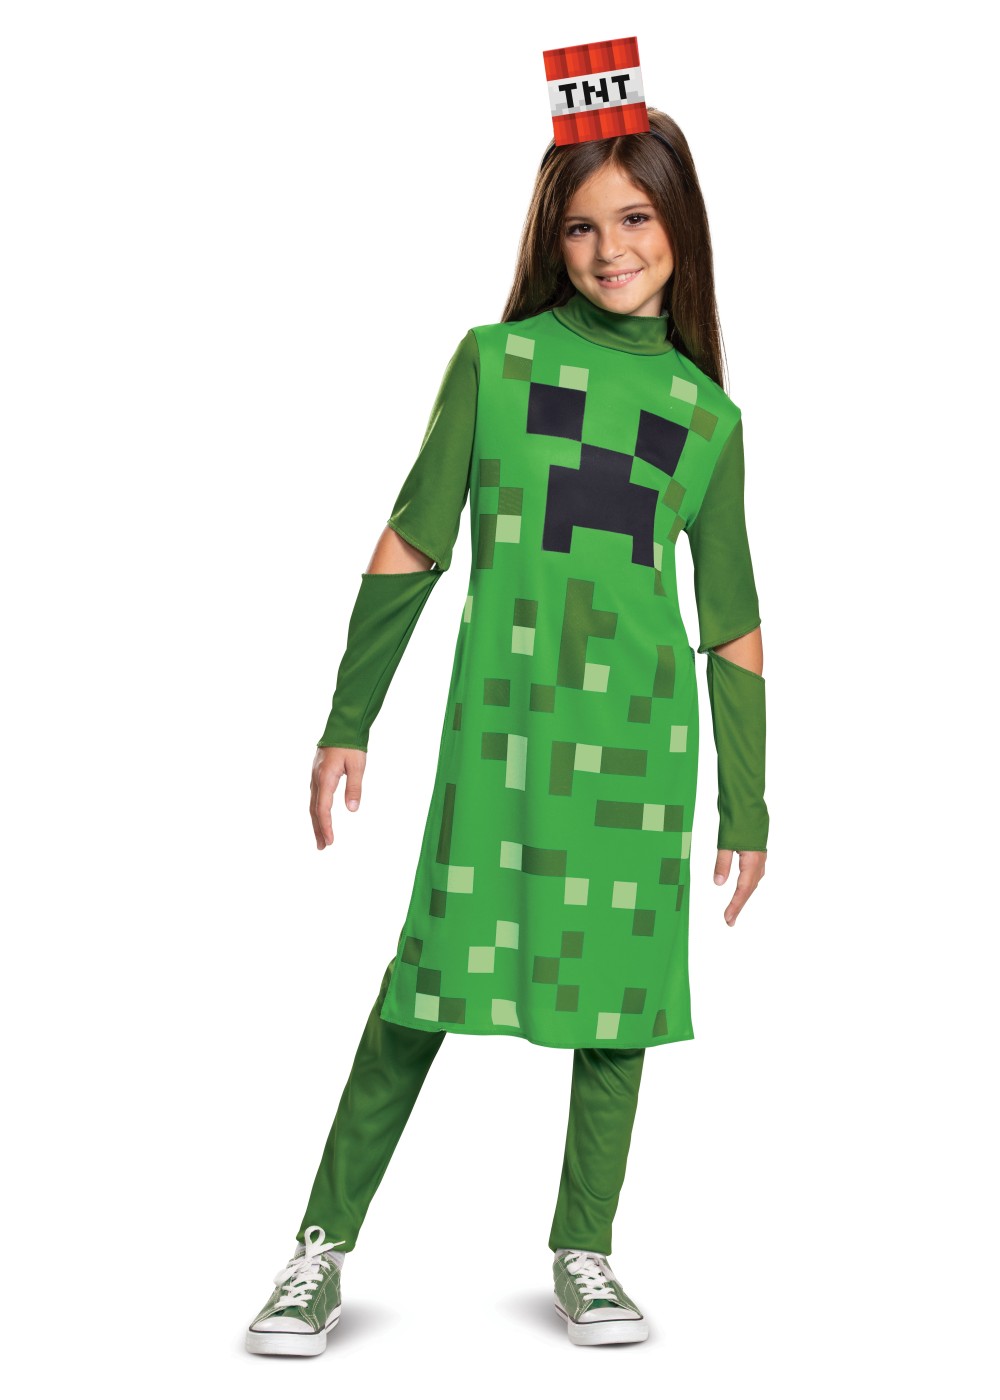 Minecraft Creeper Girl Costume